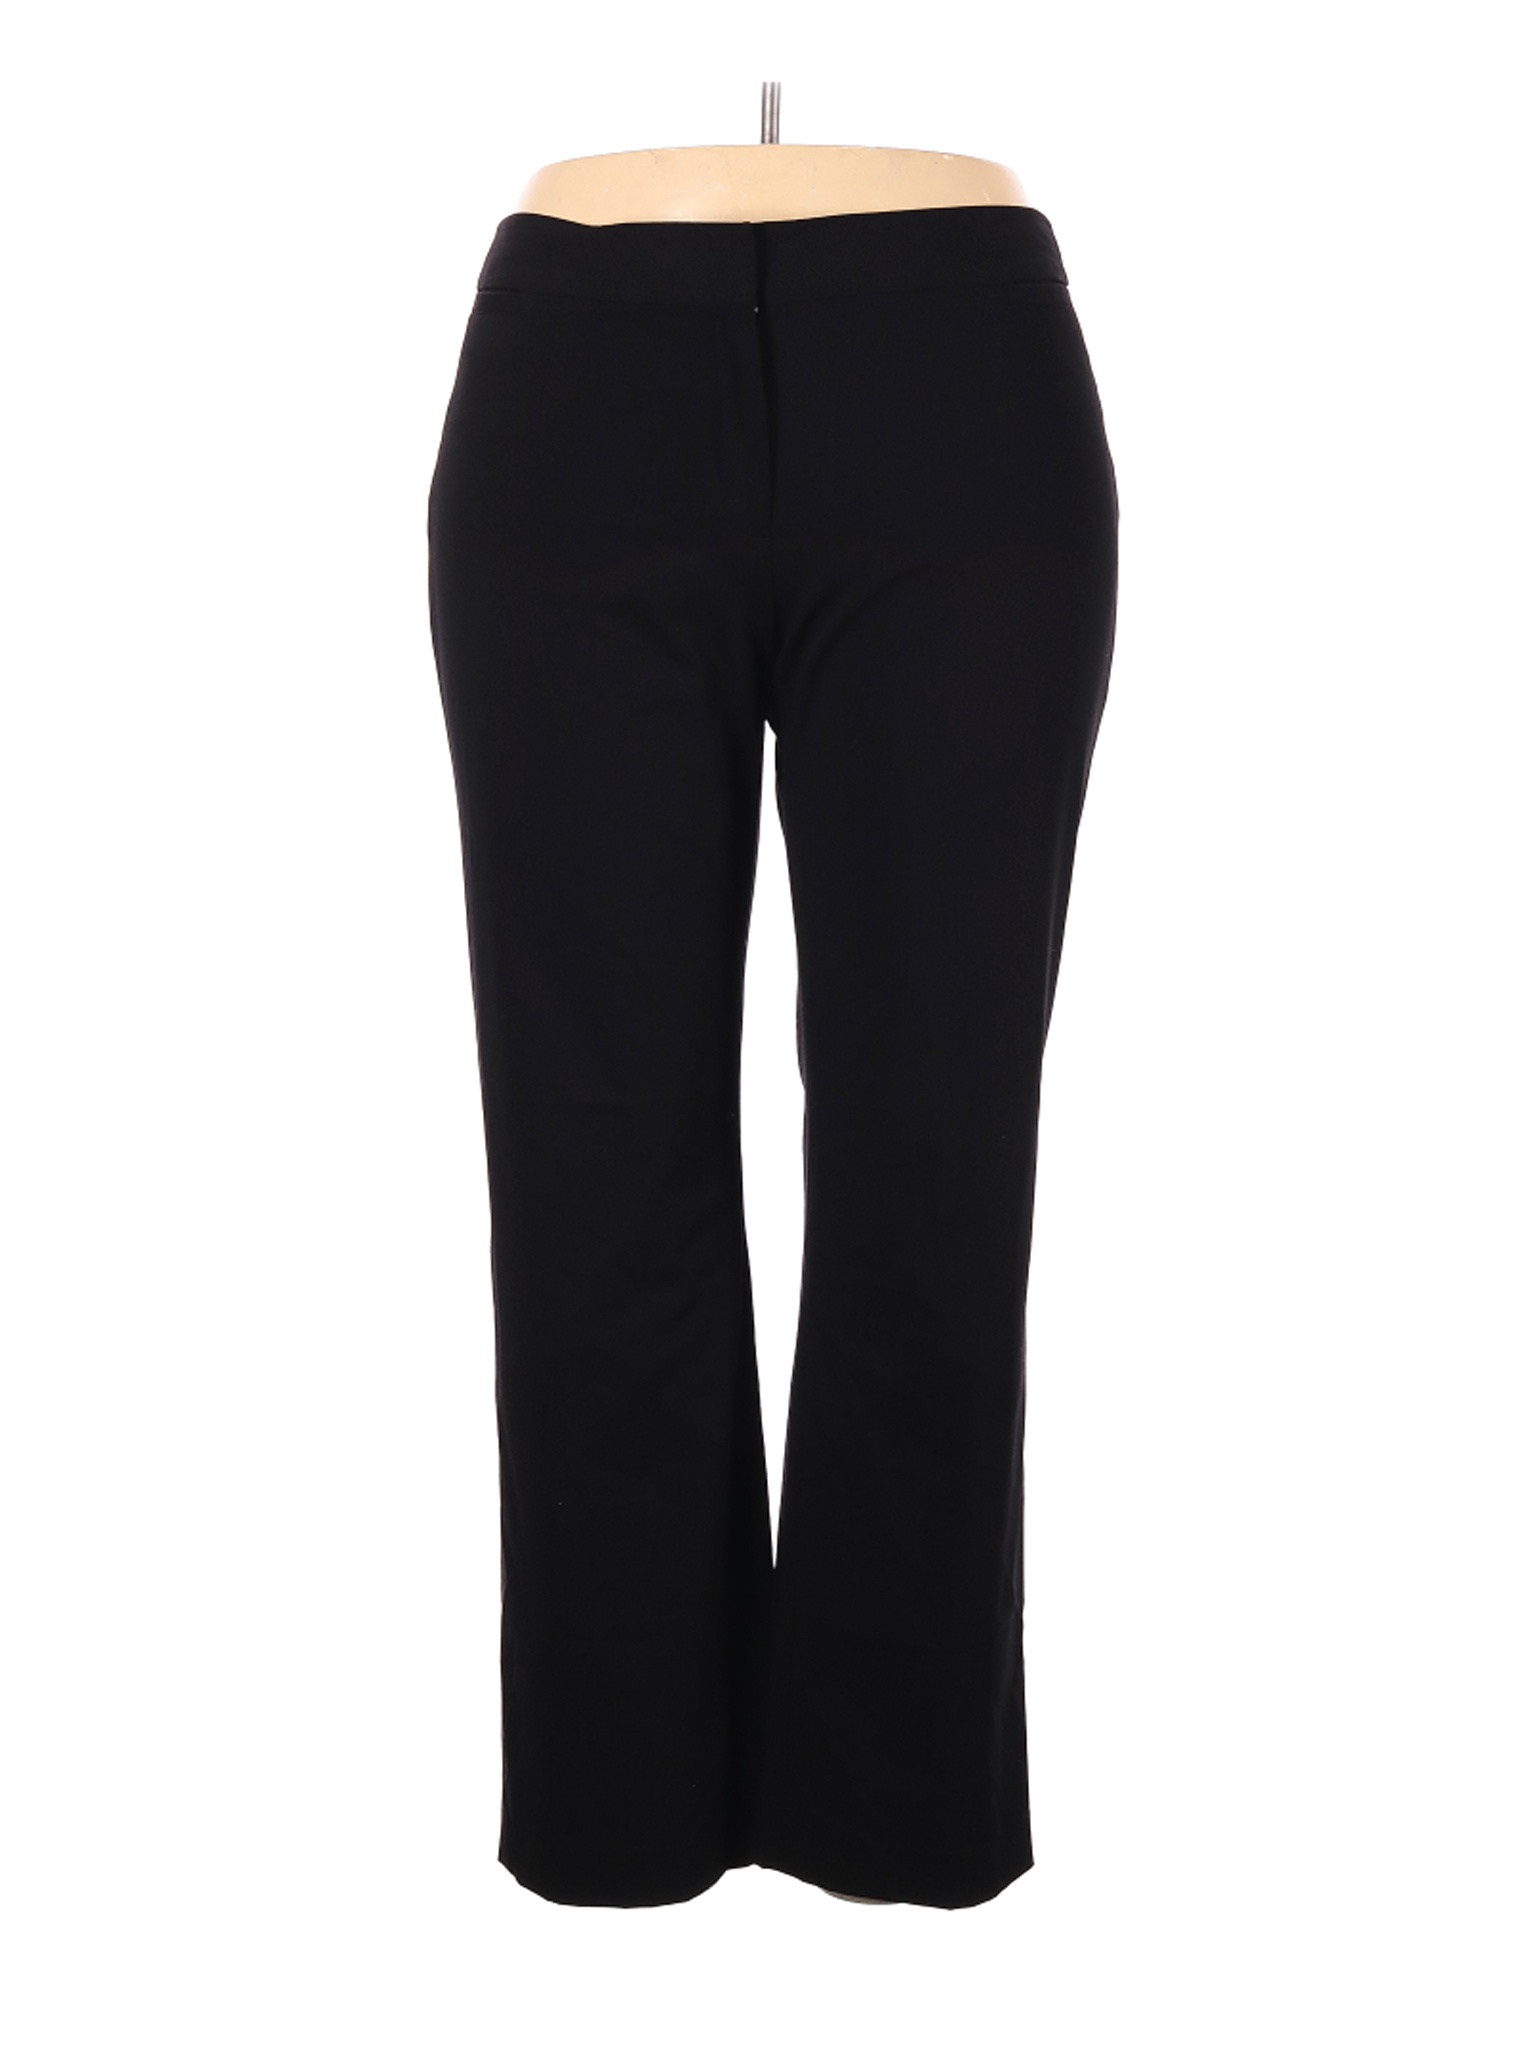 Liz Claiborne Career Women Black Dress Pants 18 Plus | eBay